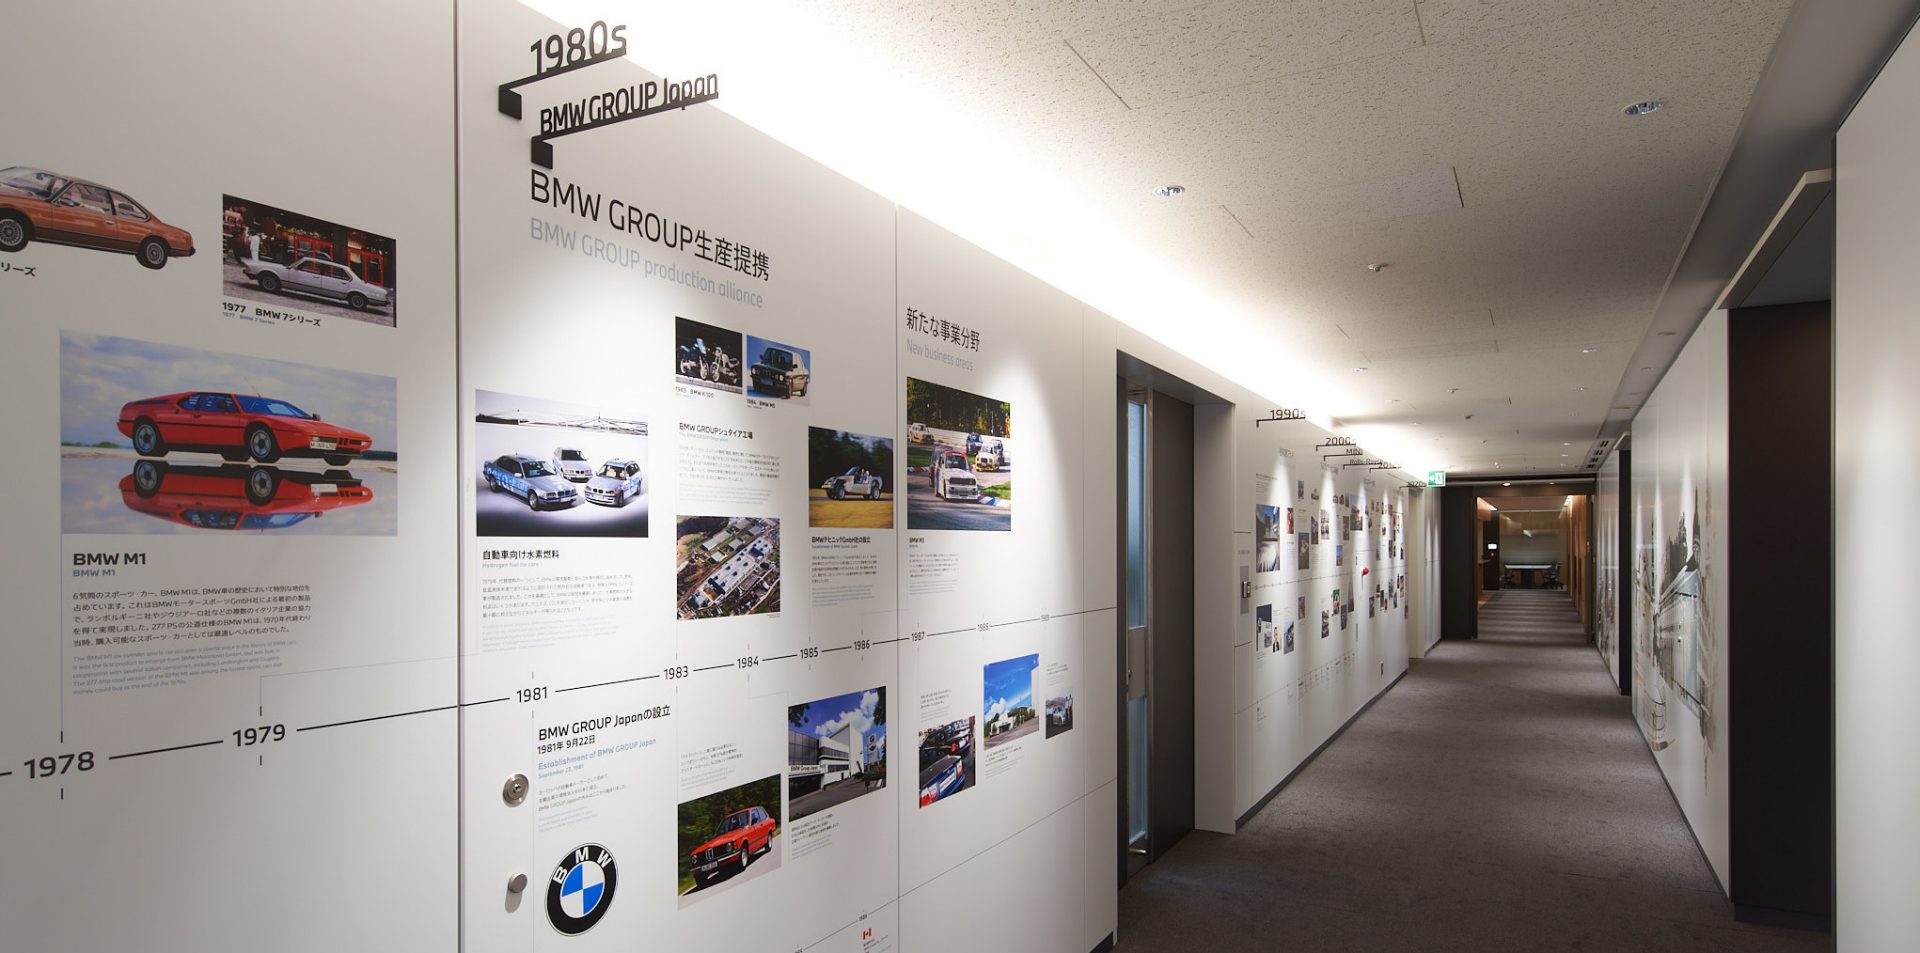 BMW Group Japan History Wall.